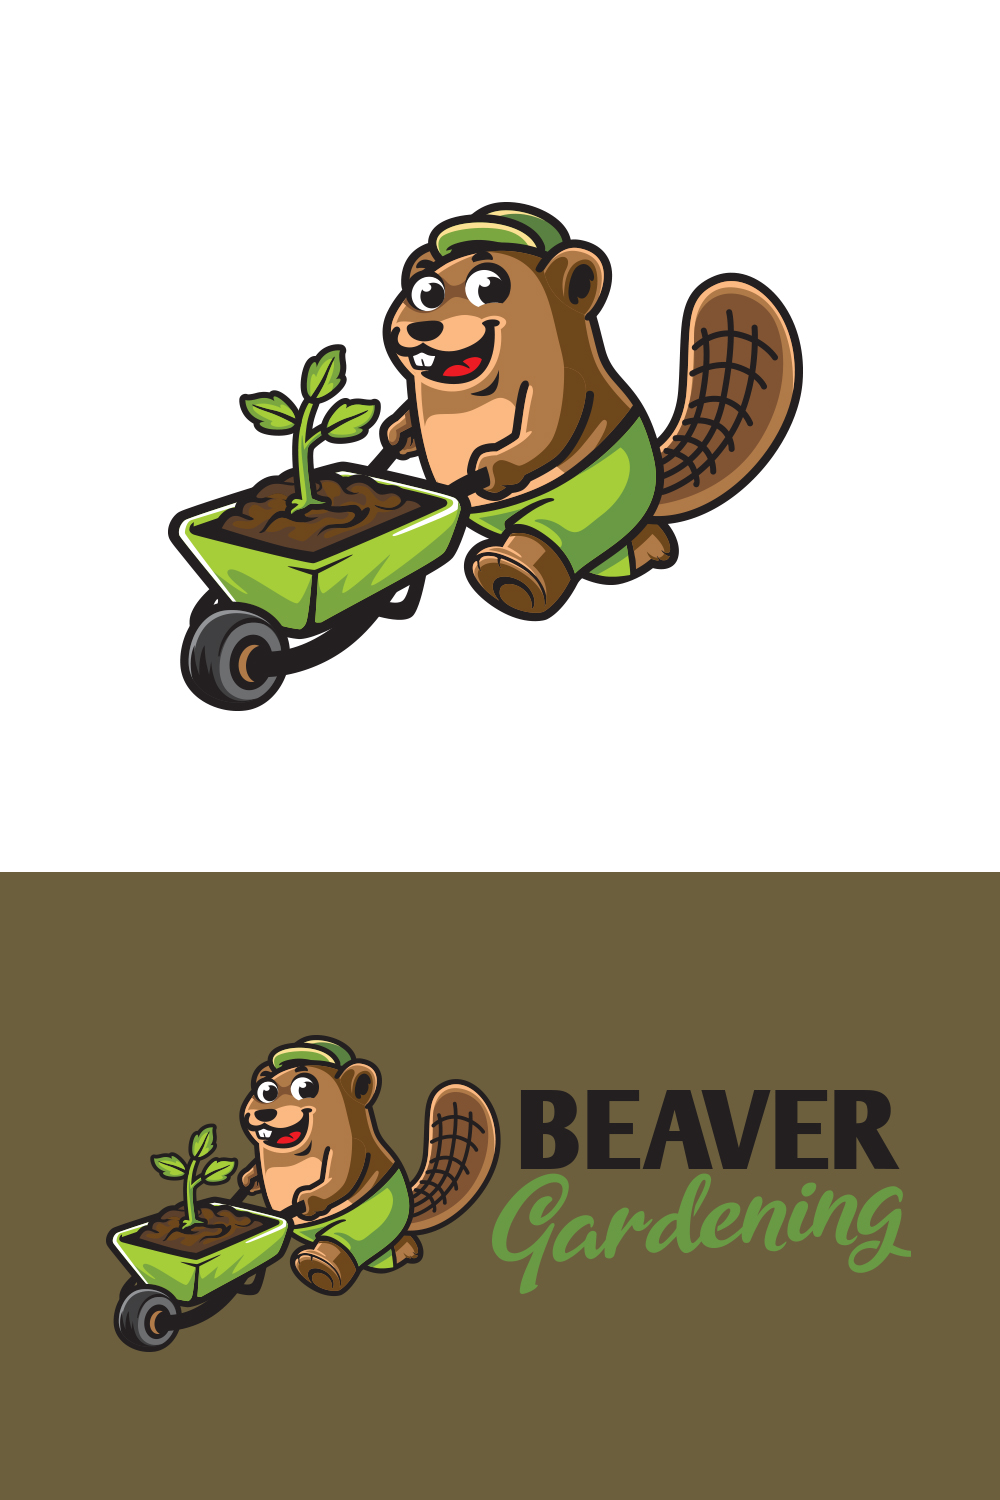 Beaver Gardening Cartoon Mascot Logo pinterest preview image.